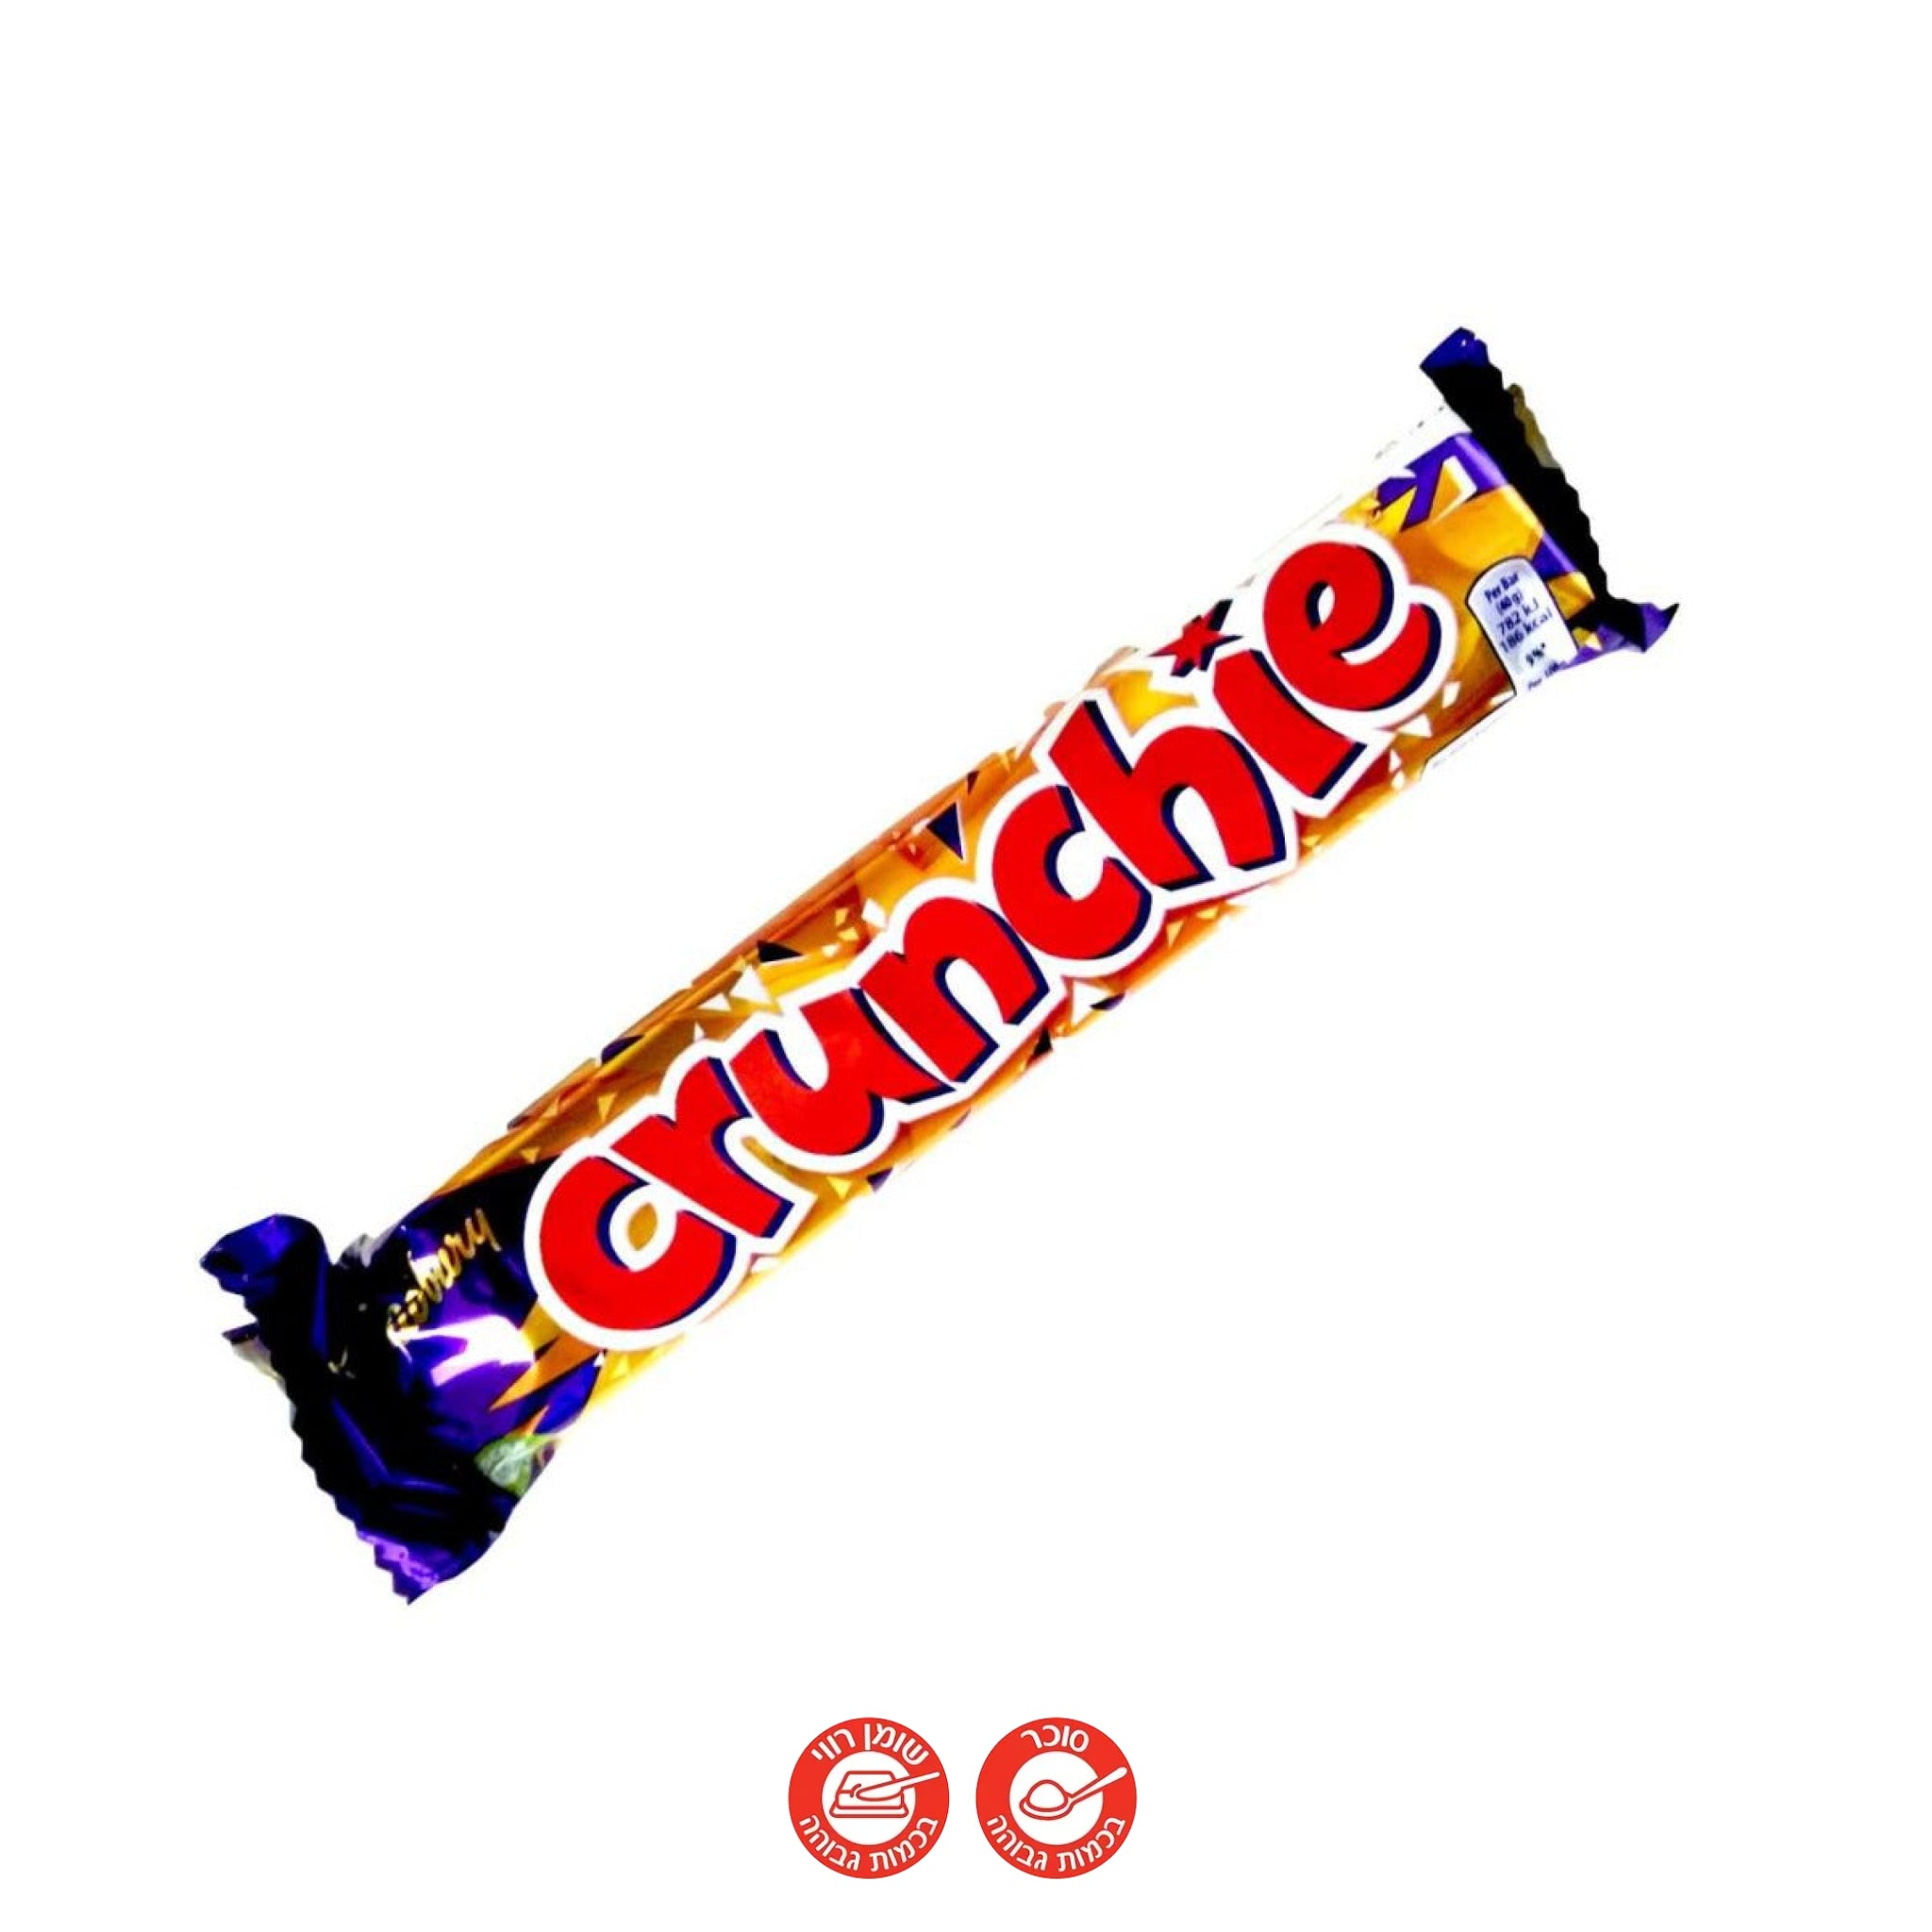 Cadbury Crunchie - שוקולד קראנץ - טעימים